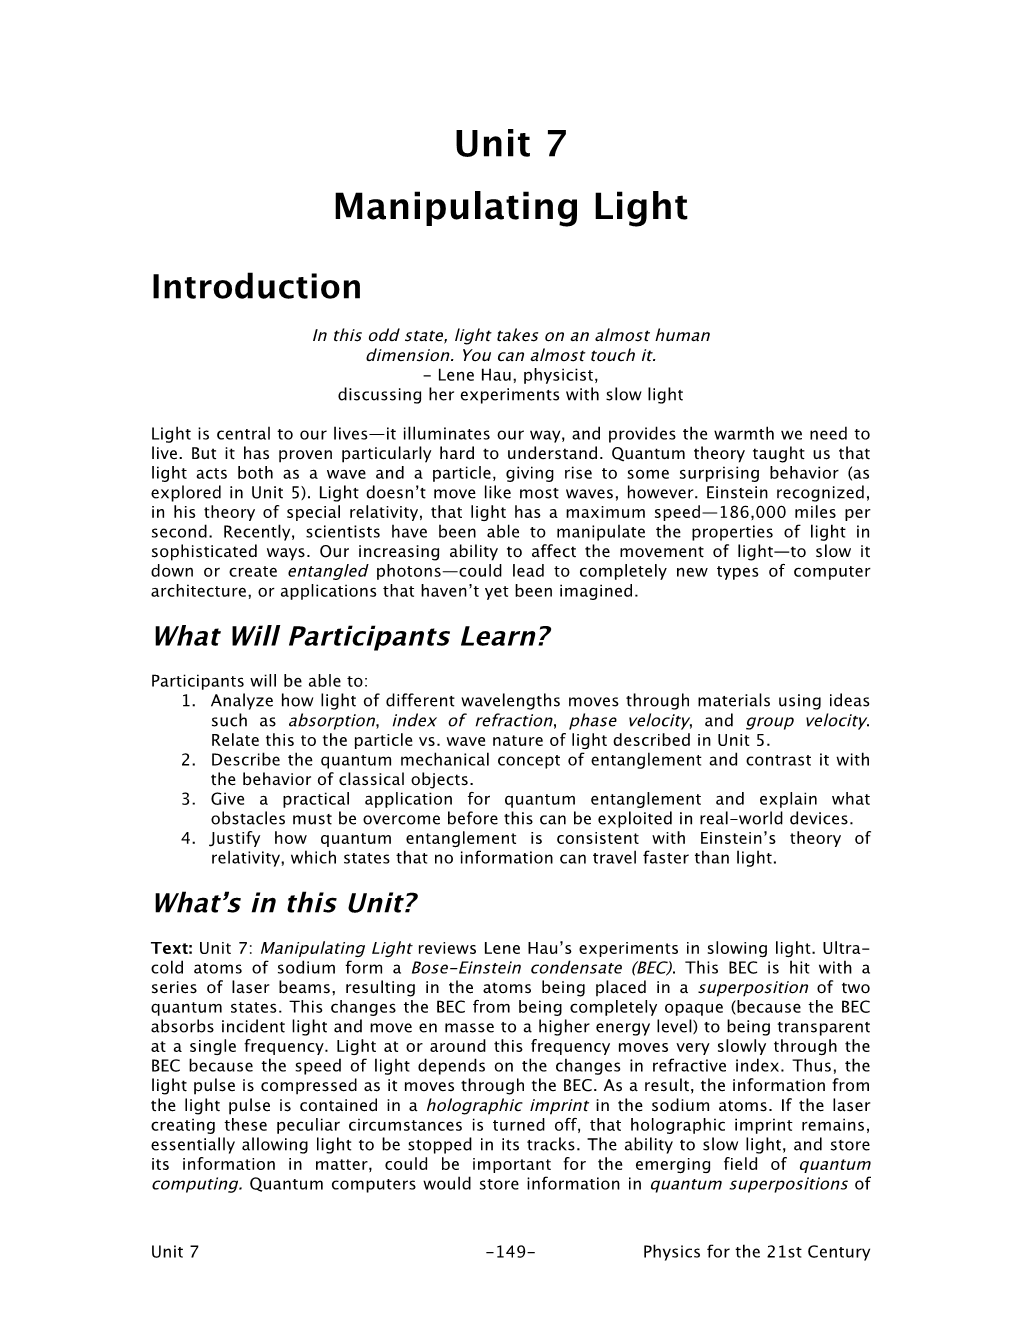 Unit 7 Manipulating Light